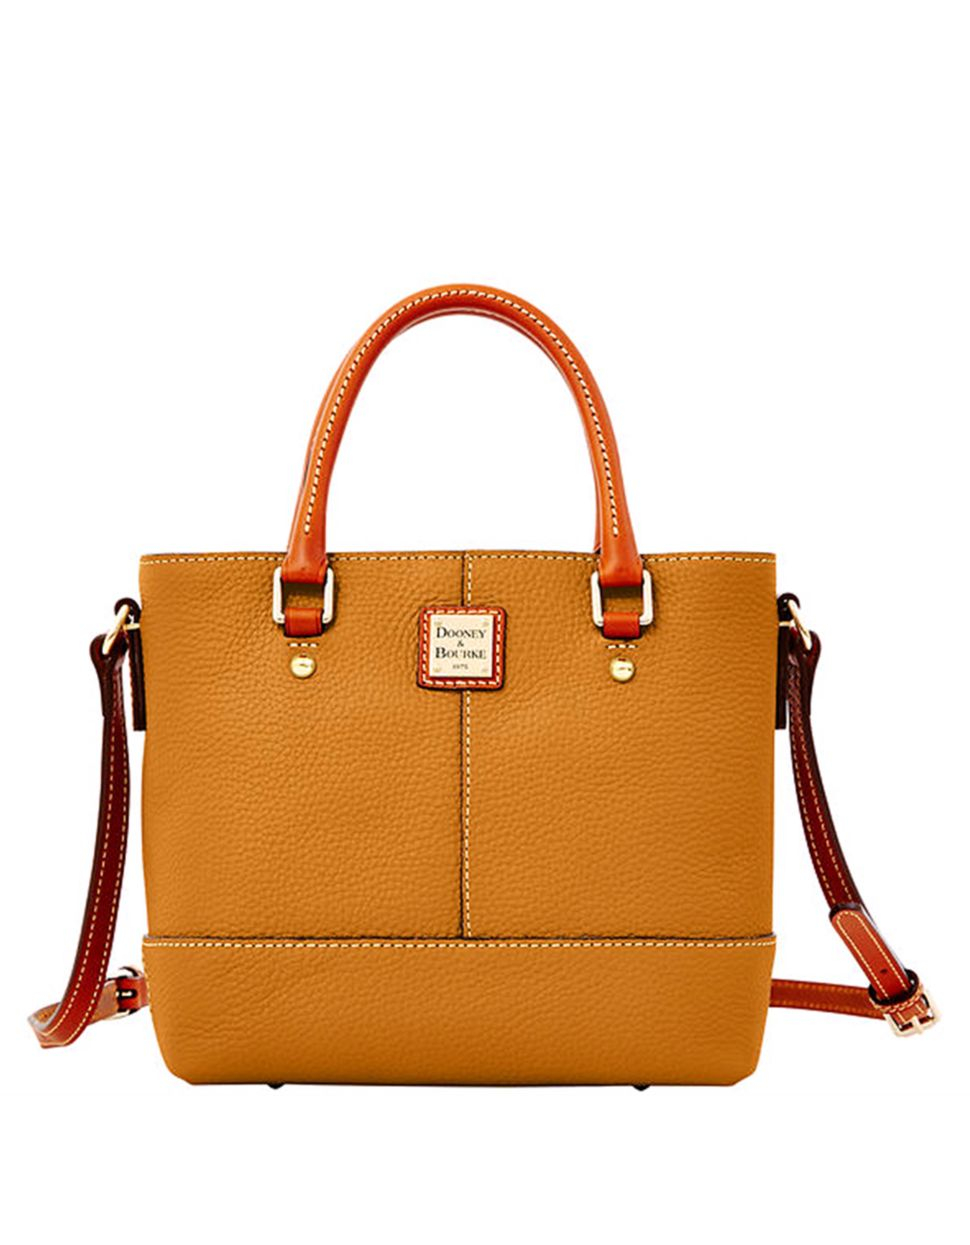 Dooney & bourke Mini Chelsea Pebbled Leather Tote Bag in Orange | Lyst